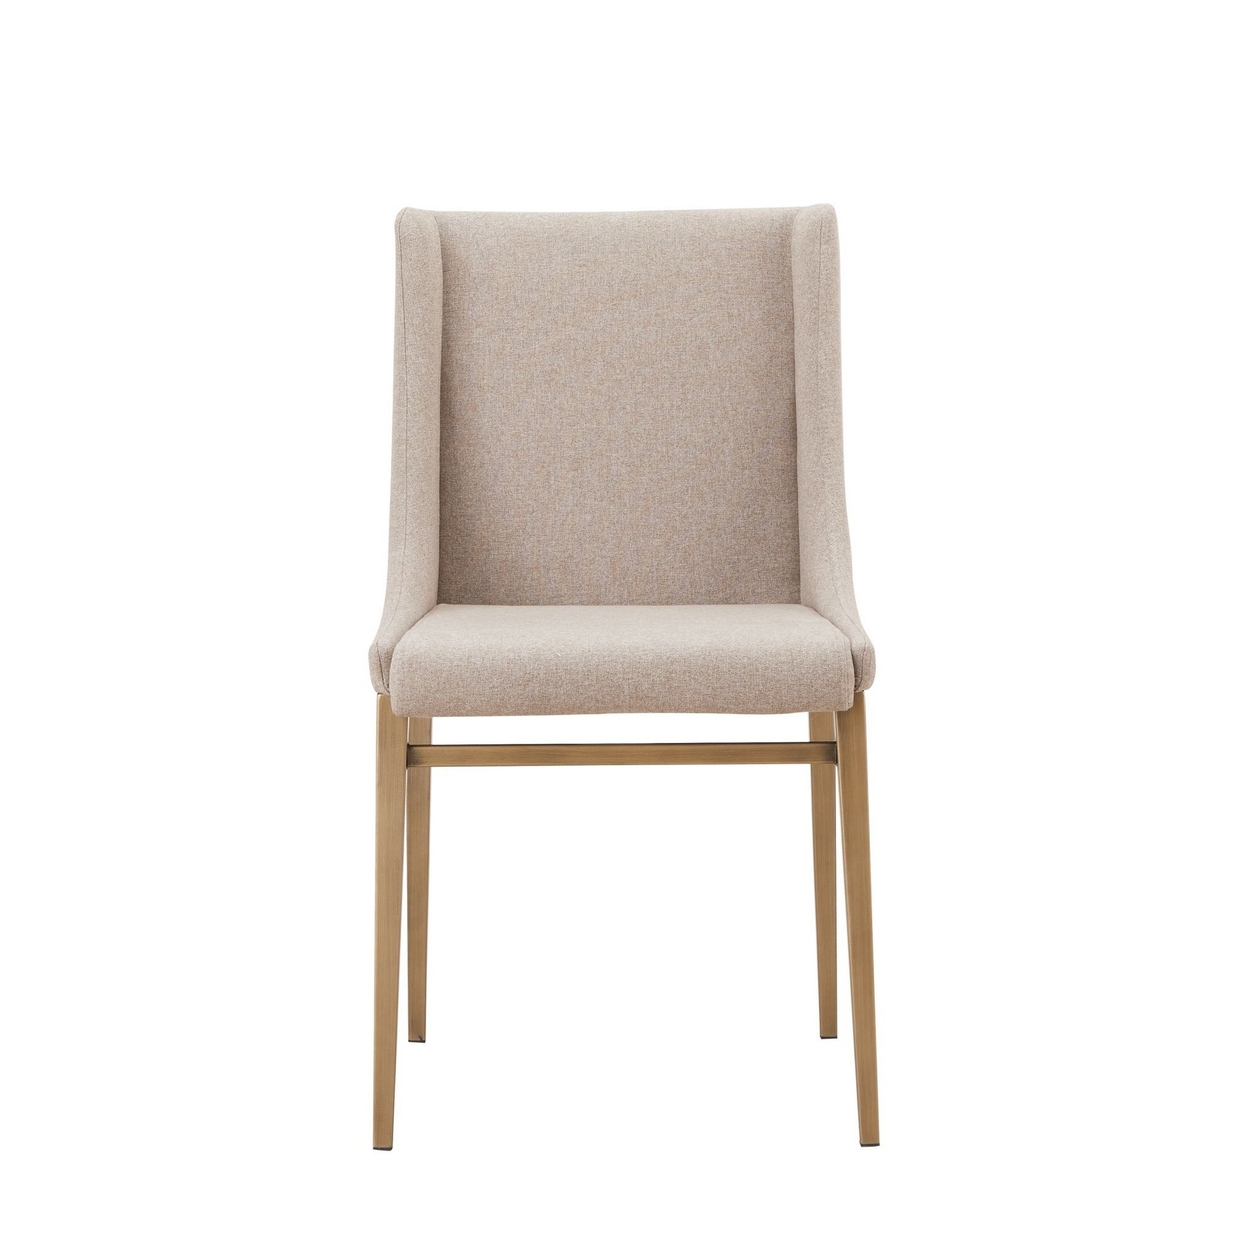 Cid Kenn 19 Inch Dining Chair, Set Of 2, Beige Fabric, Brass Finished Legs- Saltoro Sherpi